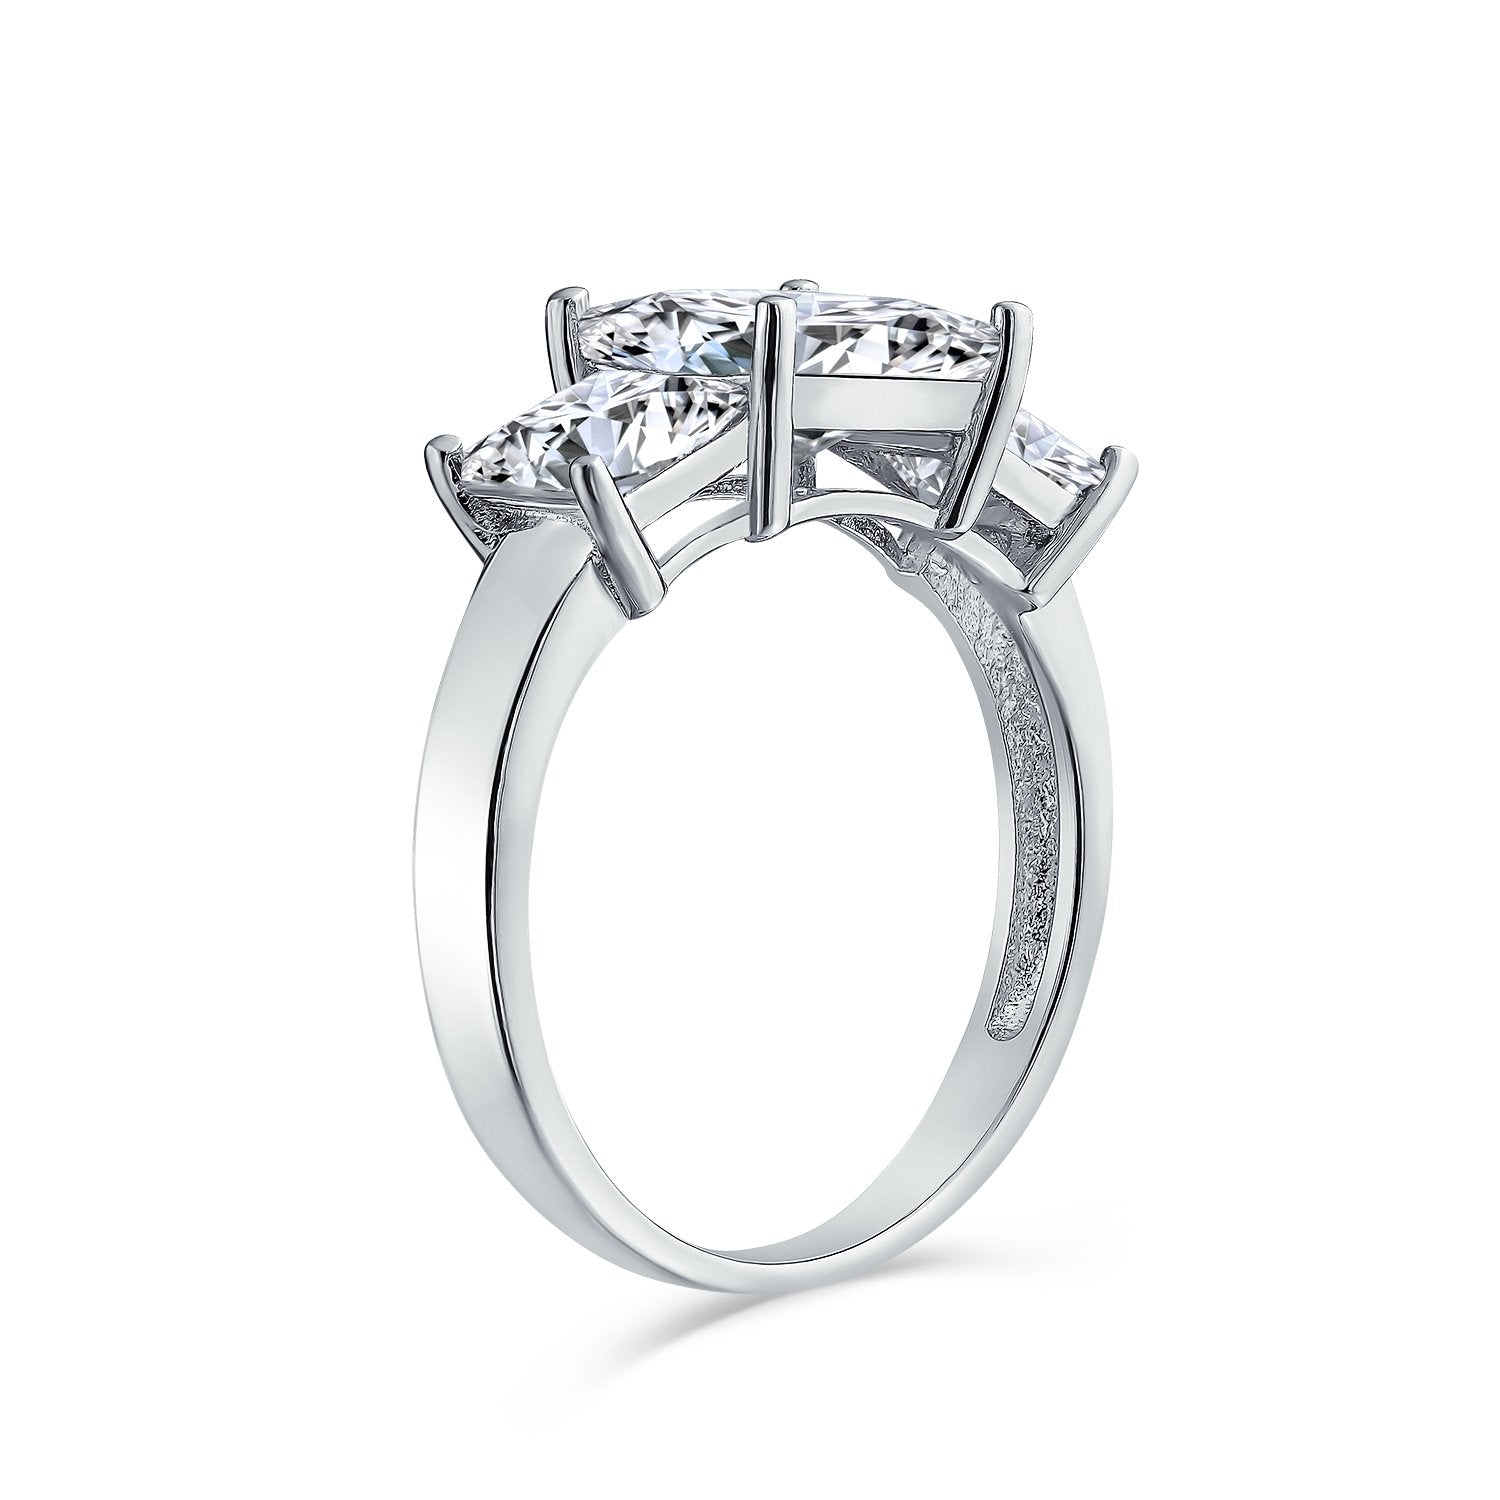 2CT Square Princess Cut 3 Stone CZ Engagement Ring 925 Sterling Silver - Joyeria Lady